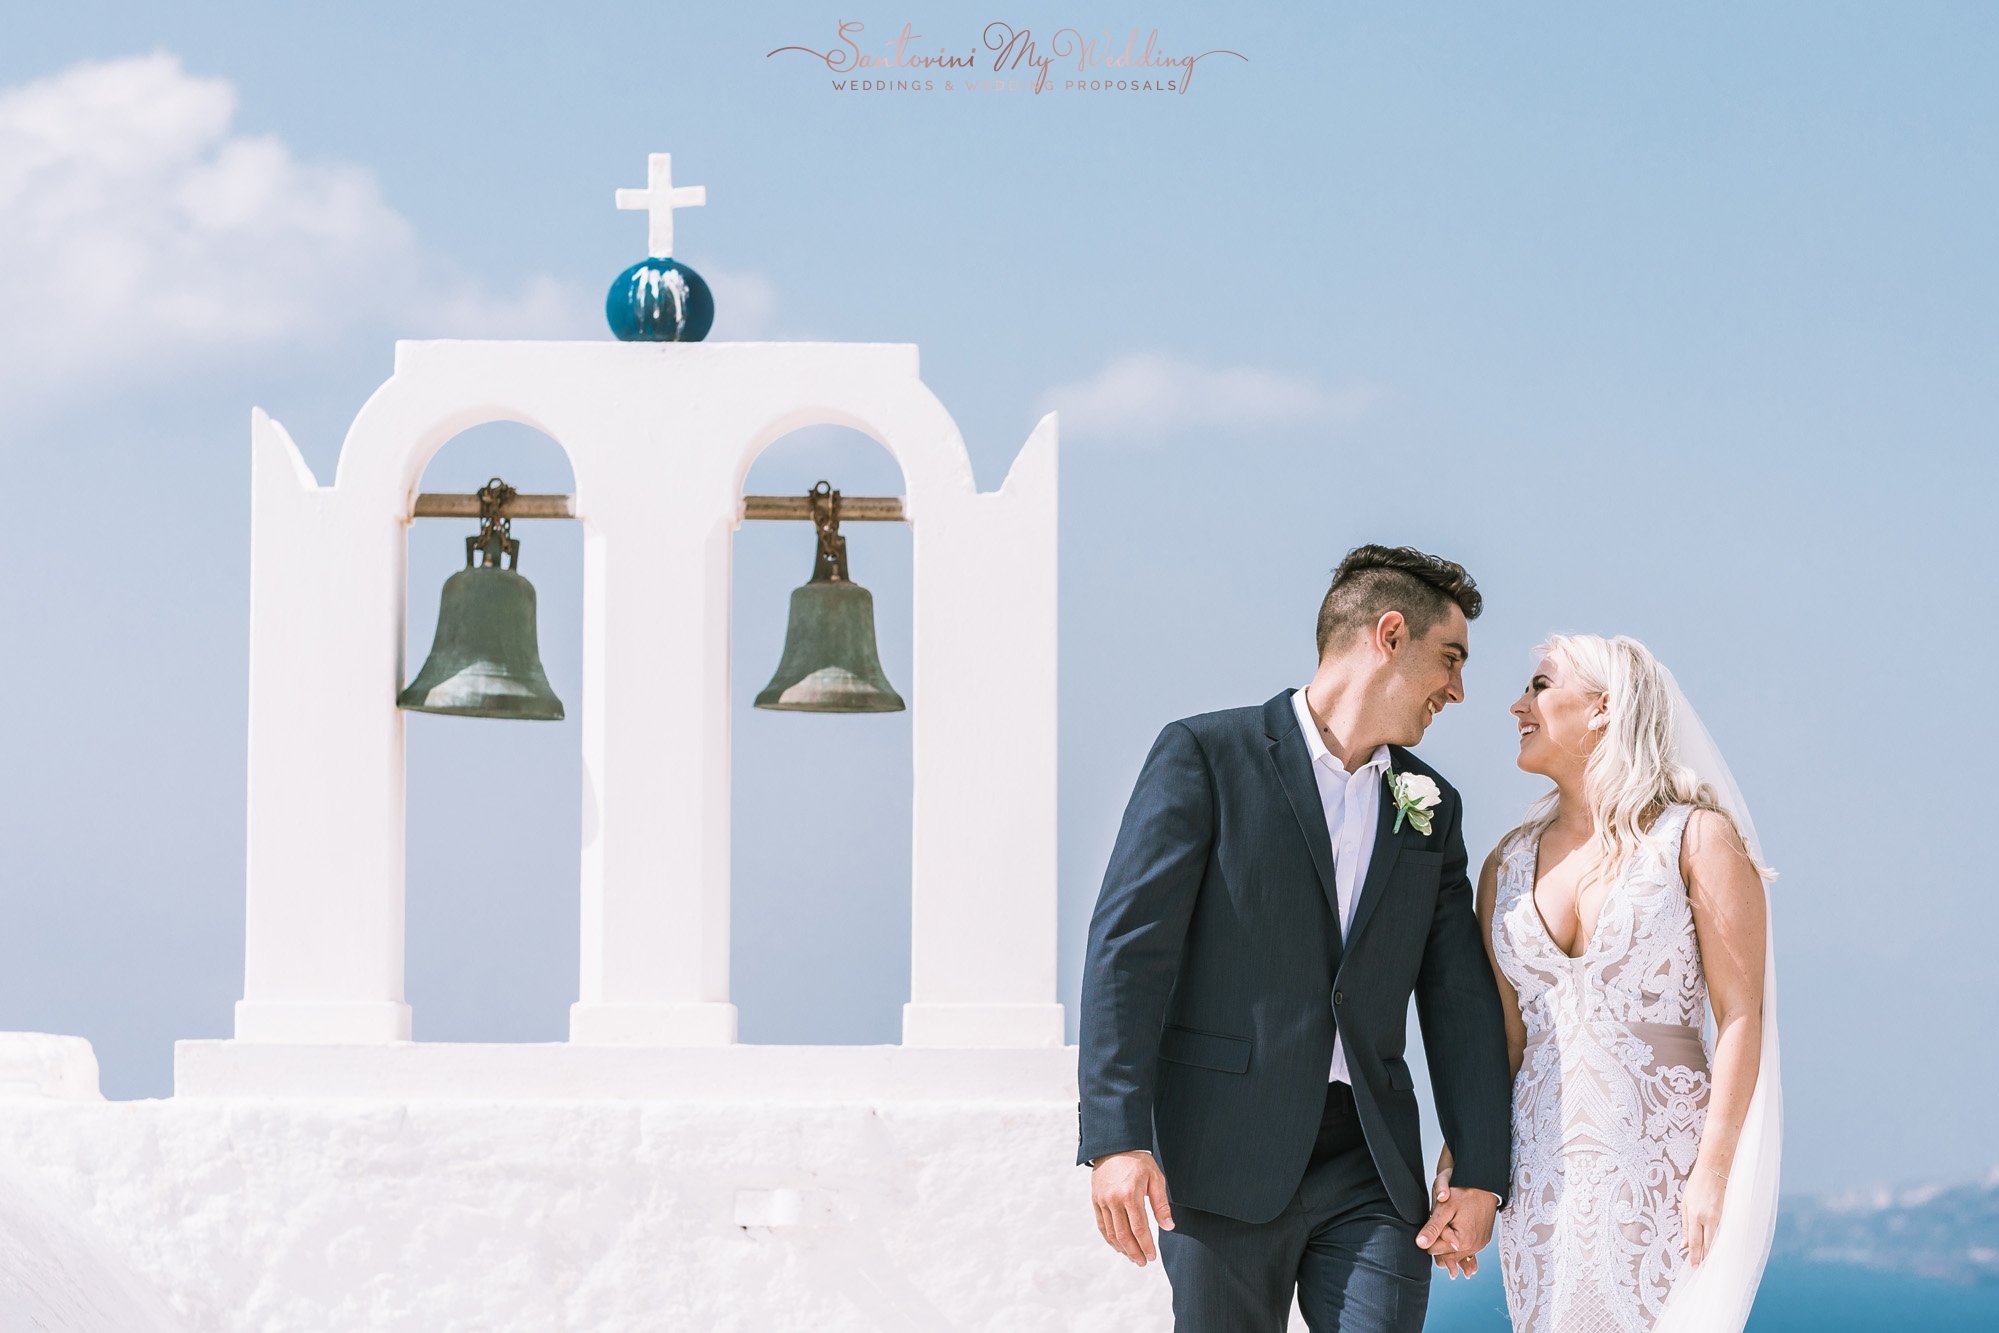 SantoriniMyWedding | greece destination wedding packages